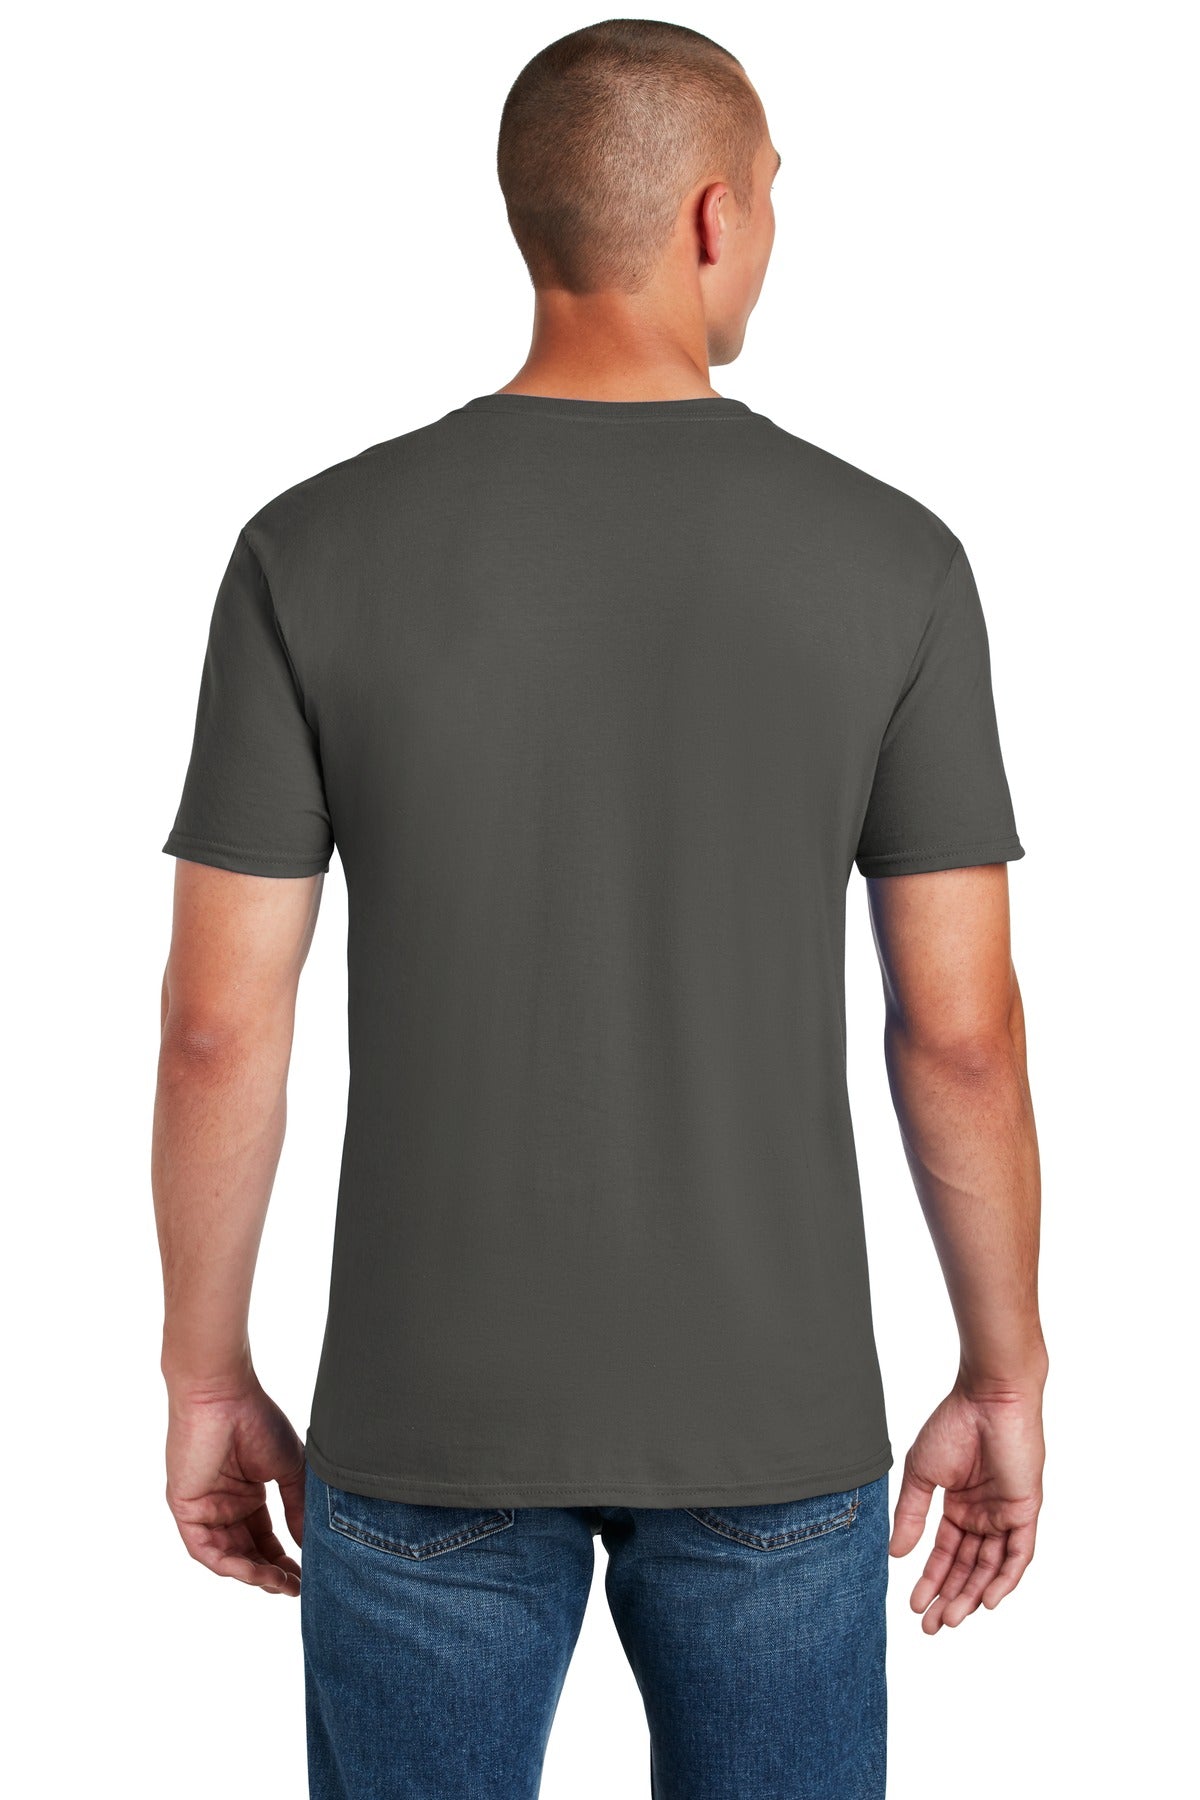 Gildan Softstyle® T-Shirt. 64000 [Charcoal] - DFW Impression